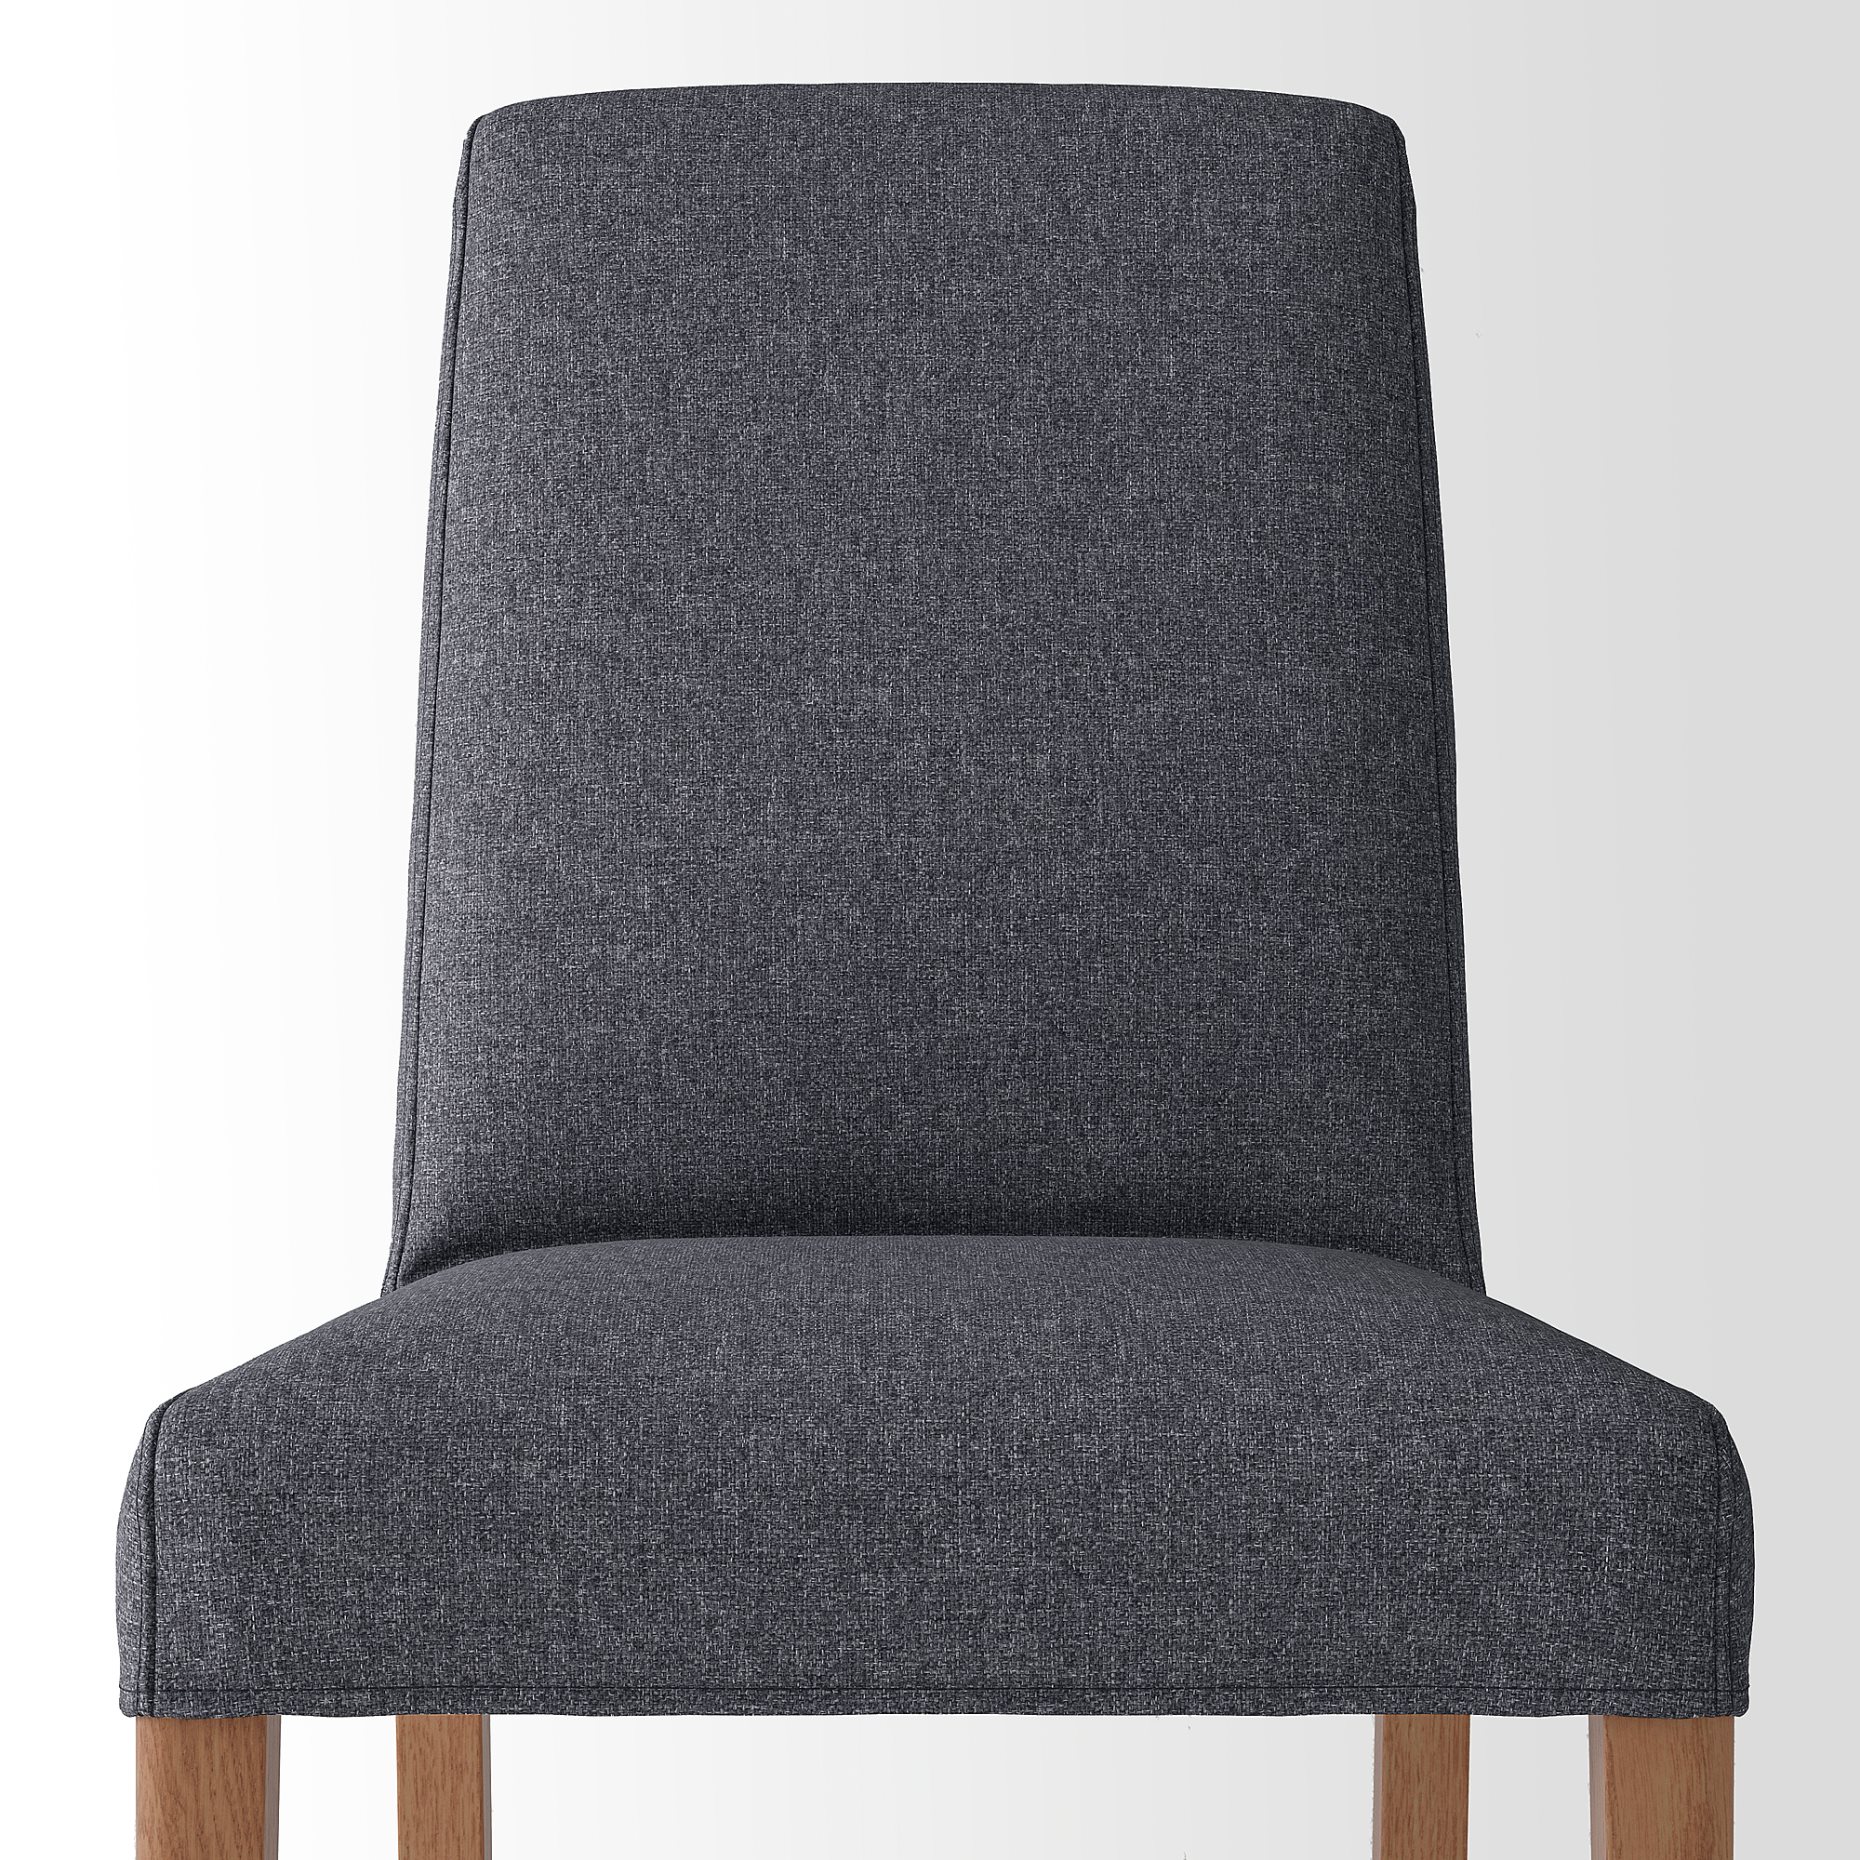 EKEDALEN/BERGMUND, table and 4 chairs, 120/180 cm, 794.084.78